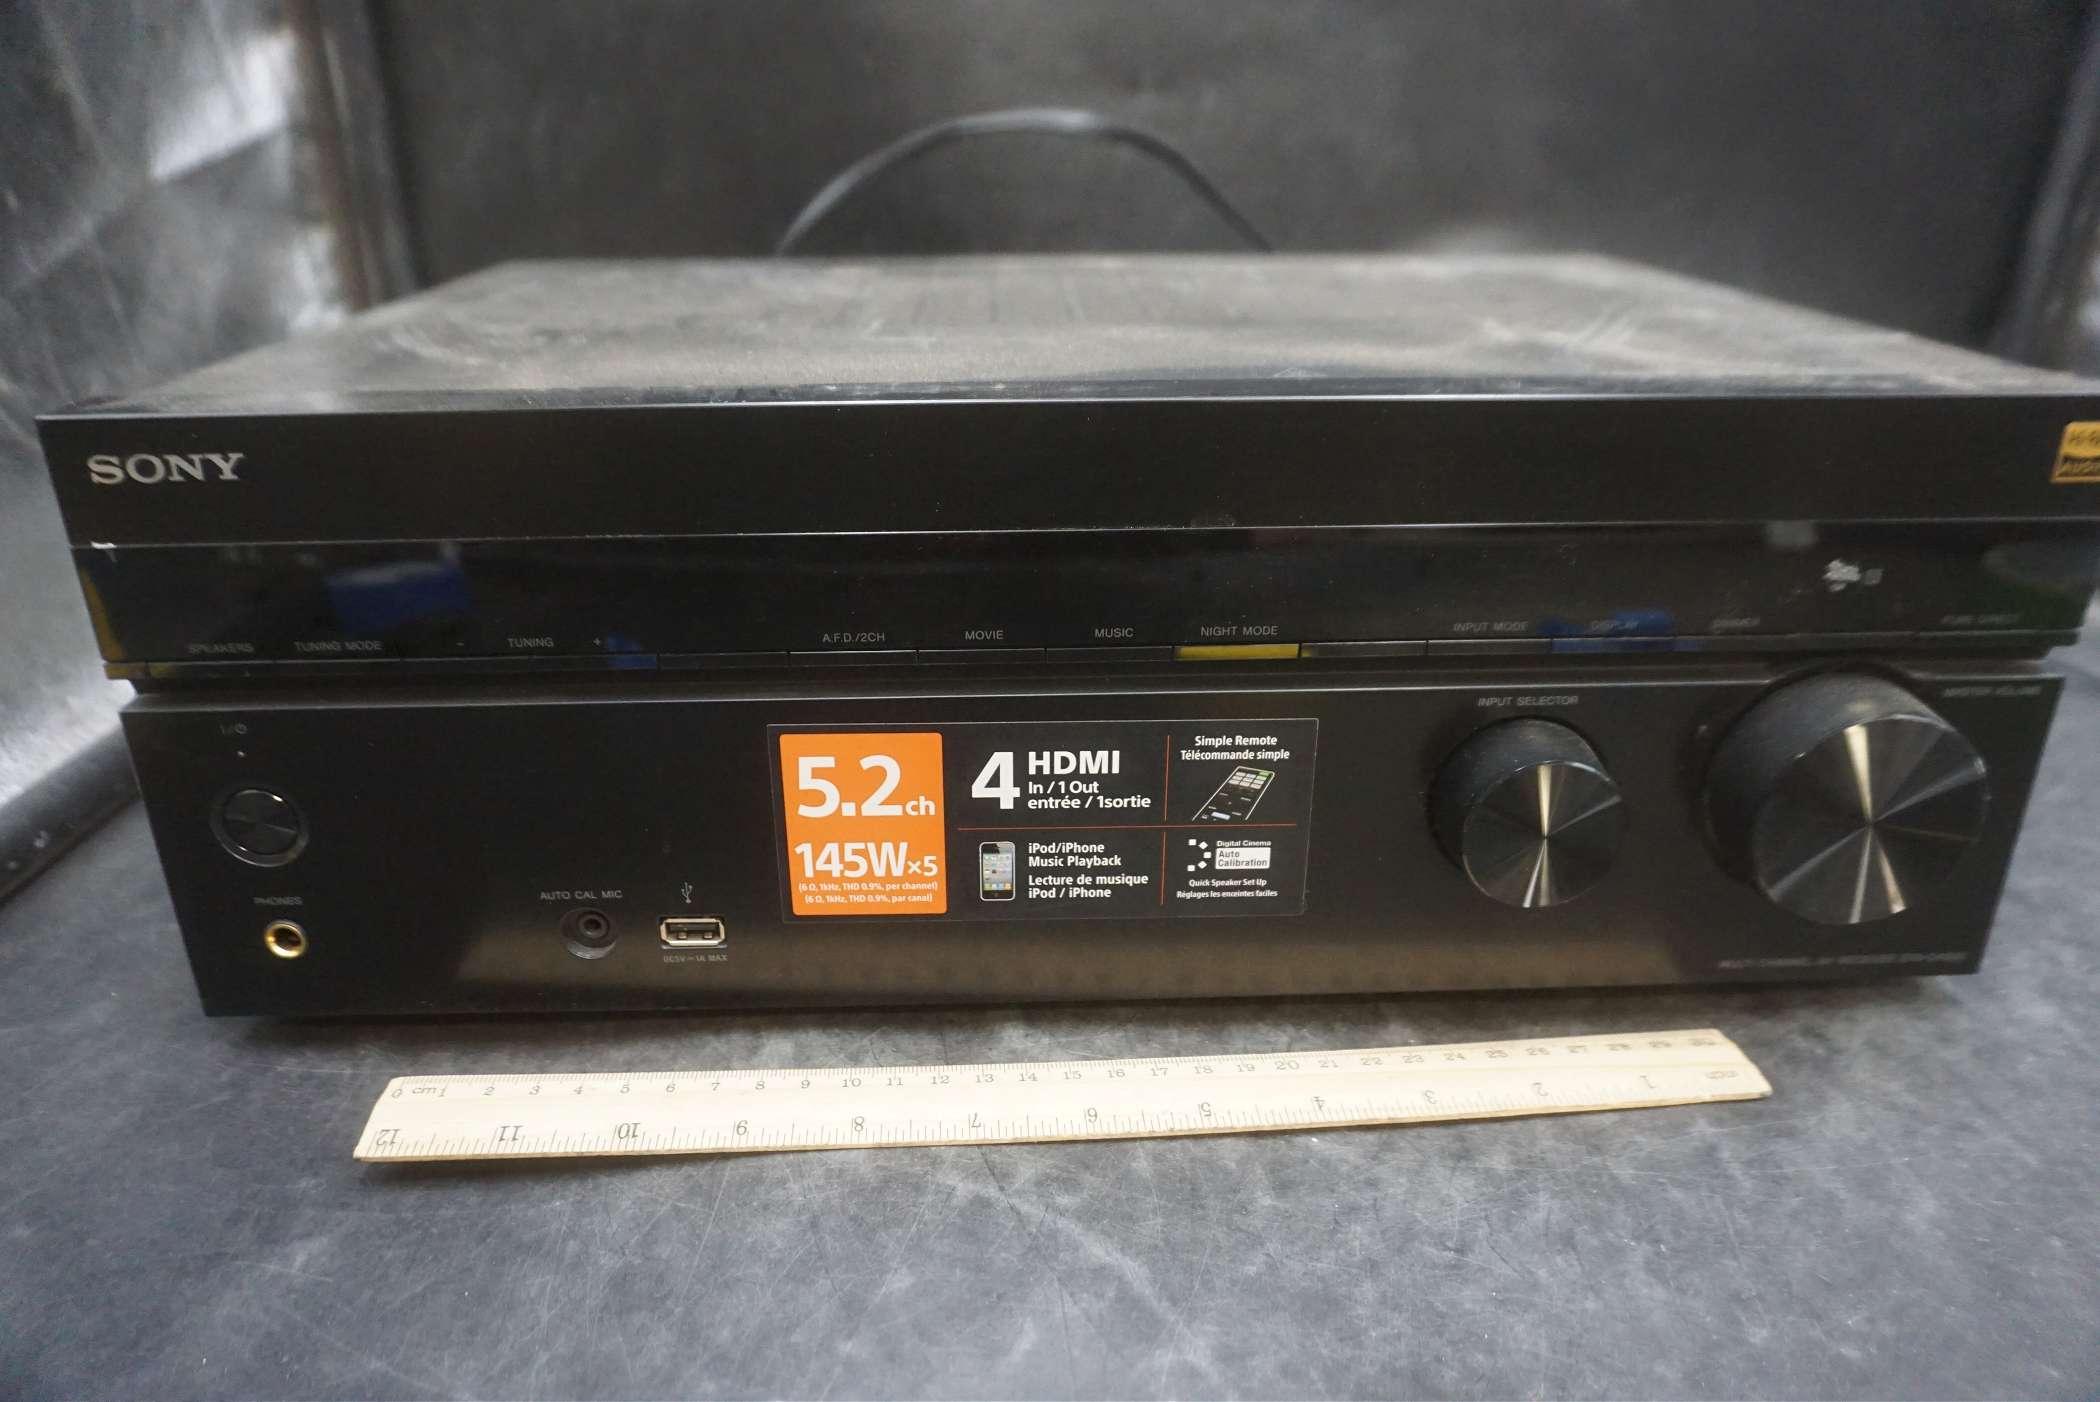 Sony Model No. STR-DH550 Multi-Channel AV Receiver